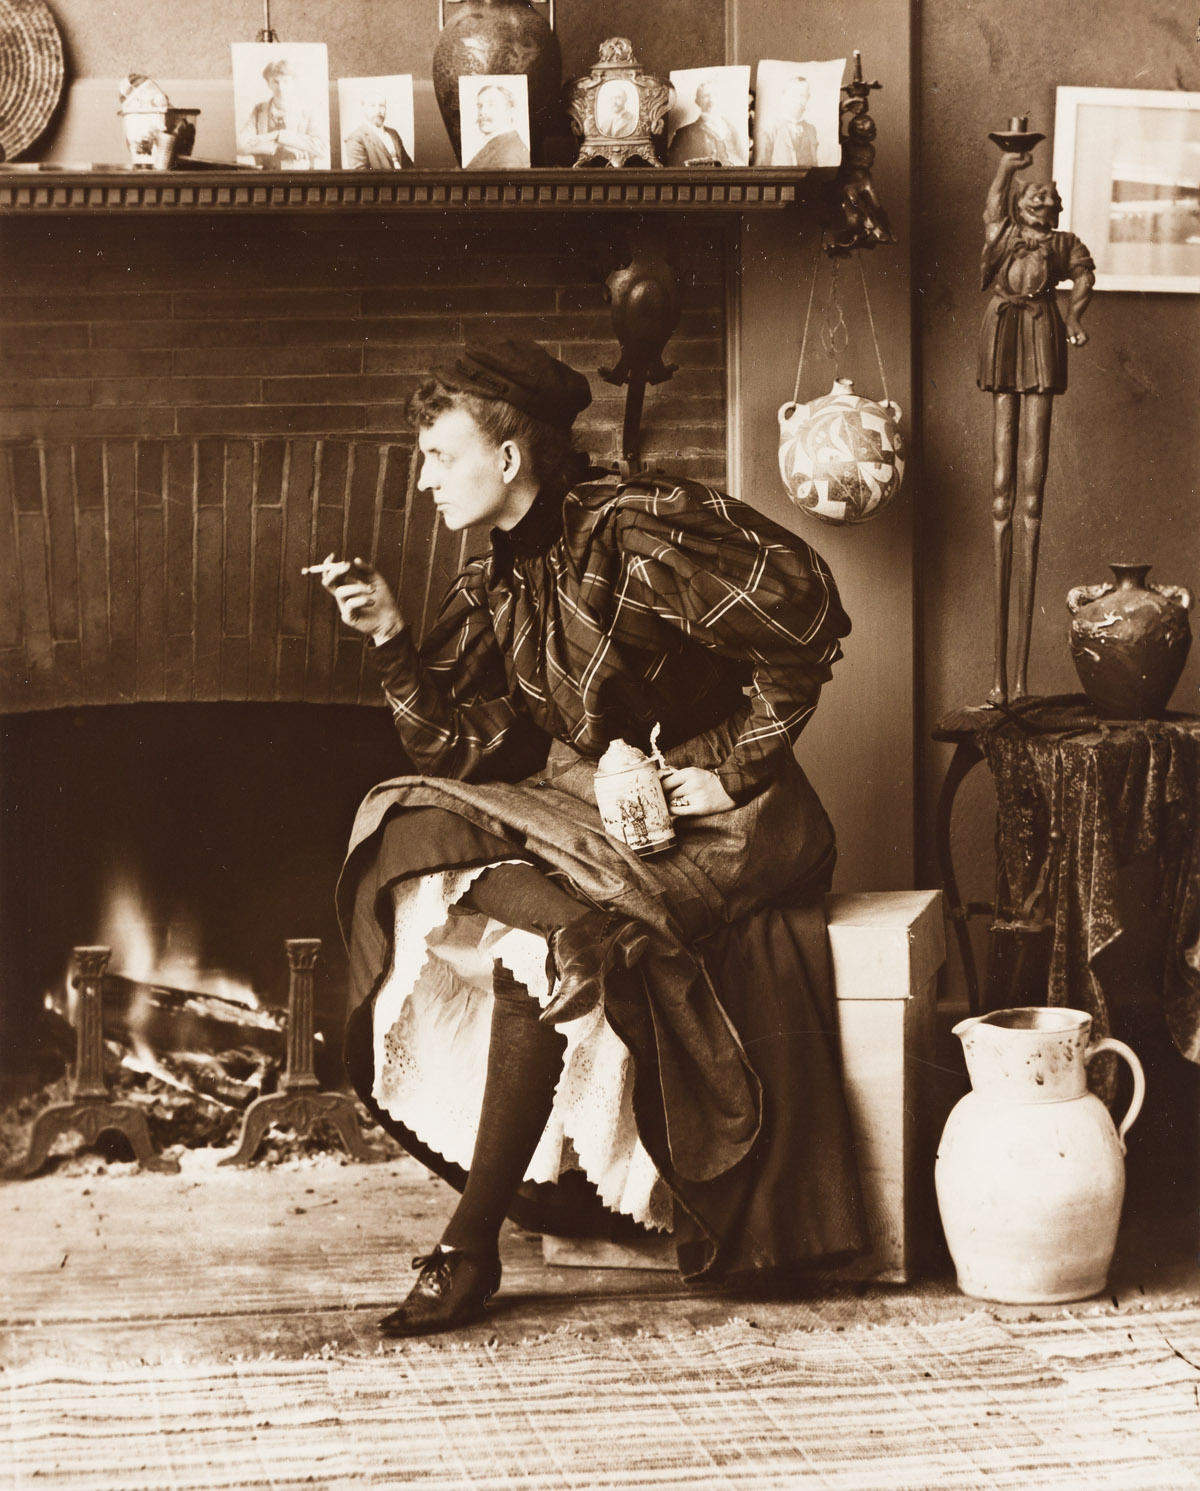 FRANCES BENJAMIN JOHNSTON (1864-1955) The New Woman (self-portrait in her Washington D.C. studio).